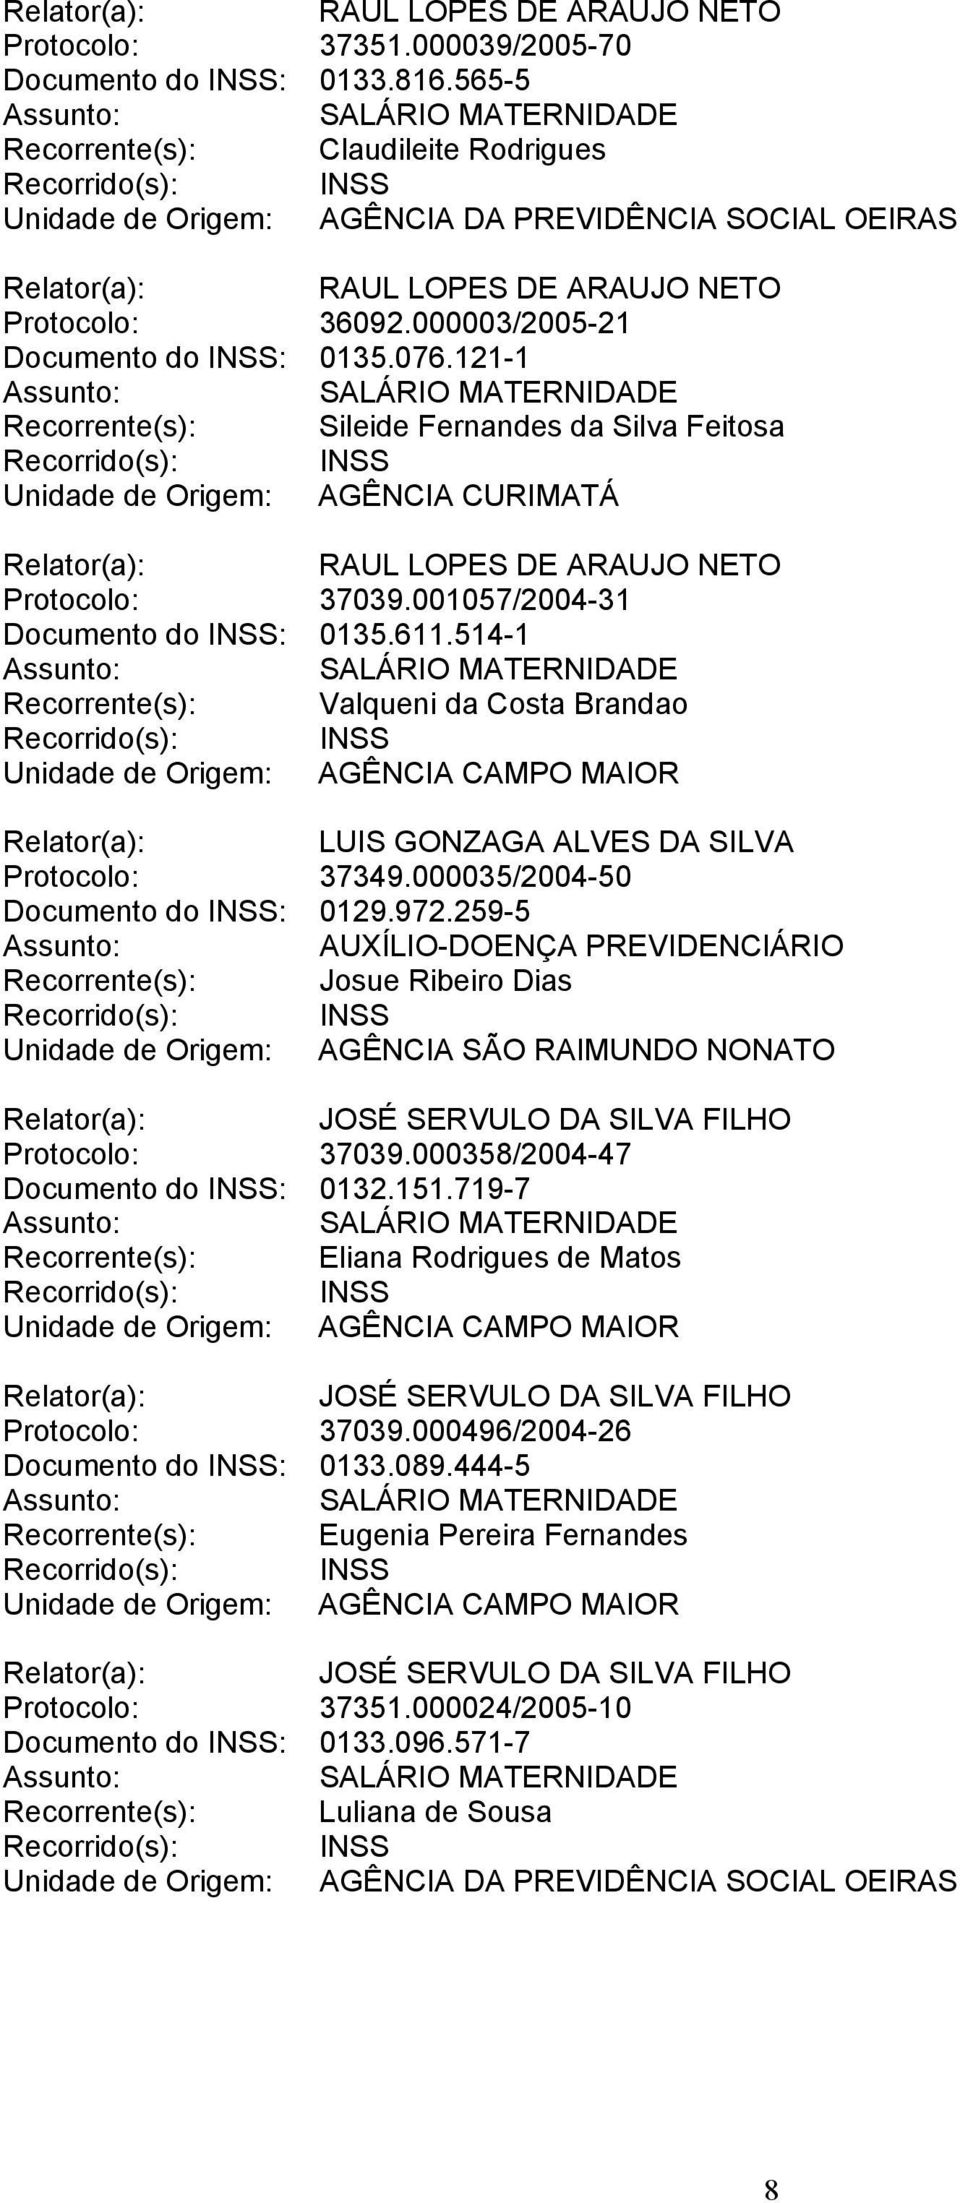 514-1 Recorrente(s): Valqueni da Costa Brandao LUIS GONZAGA ALVES DA SILVA Protocolo: 37349.000035/2004-50 Documento do INSS: 0129.972.